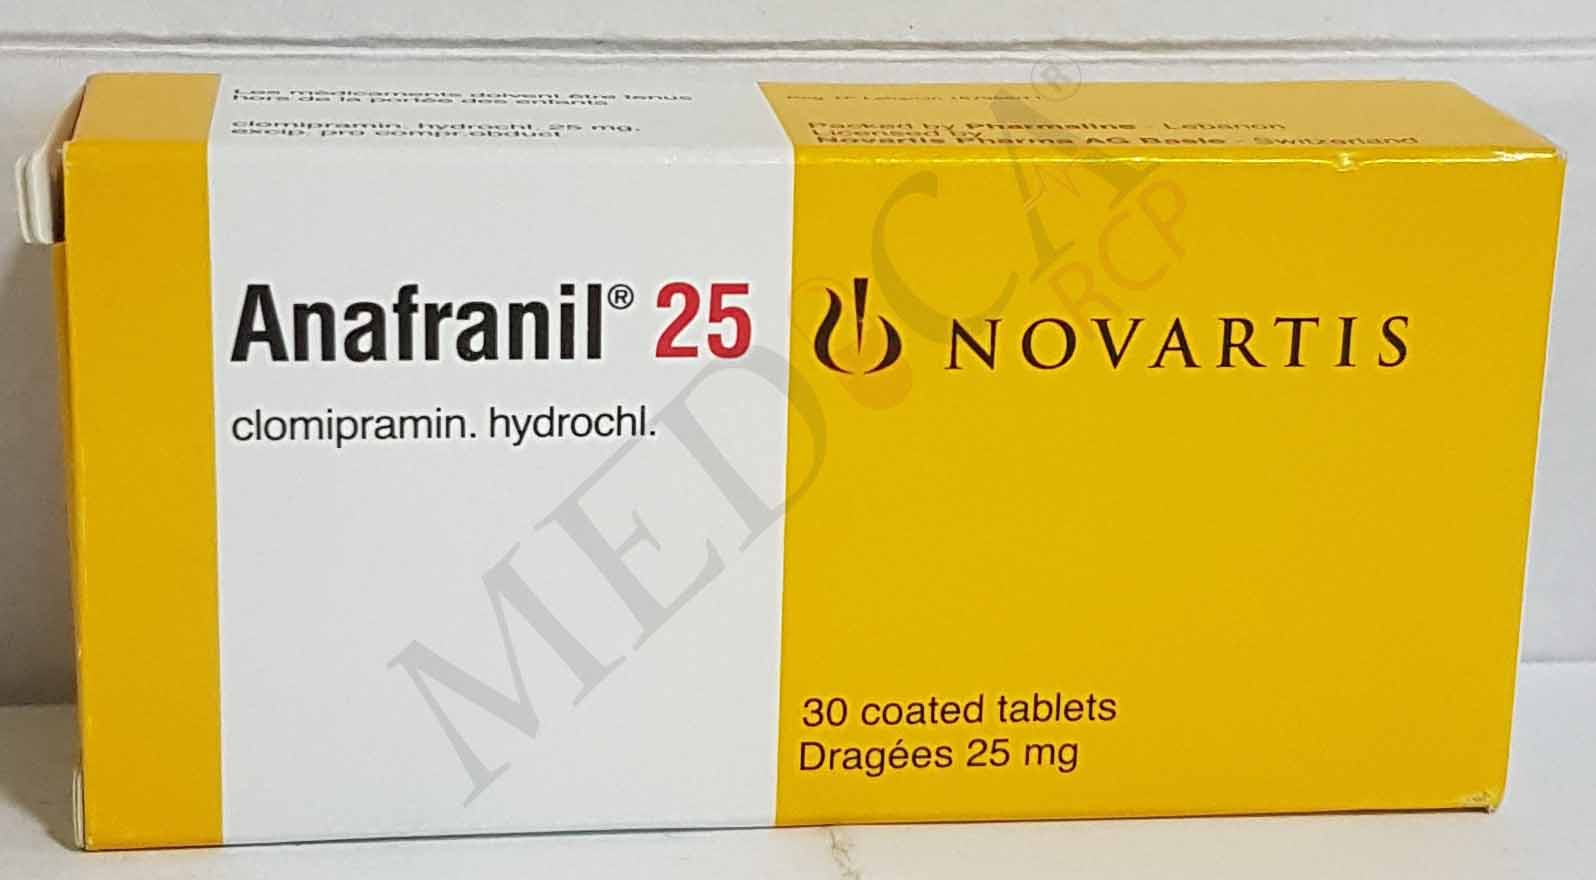 Anafranil SC Tablets 25mg